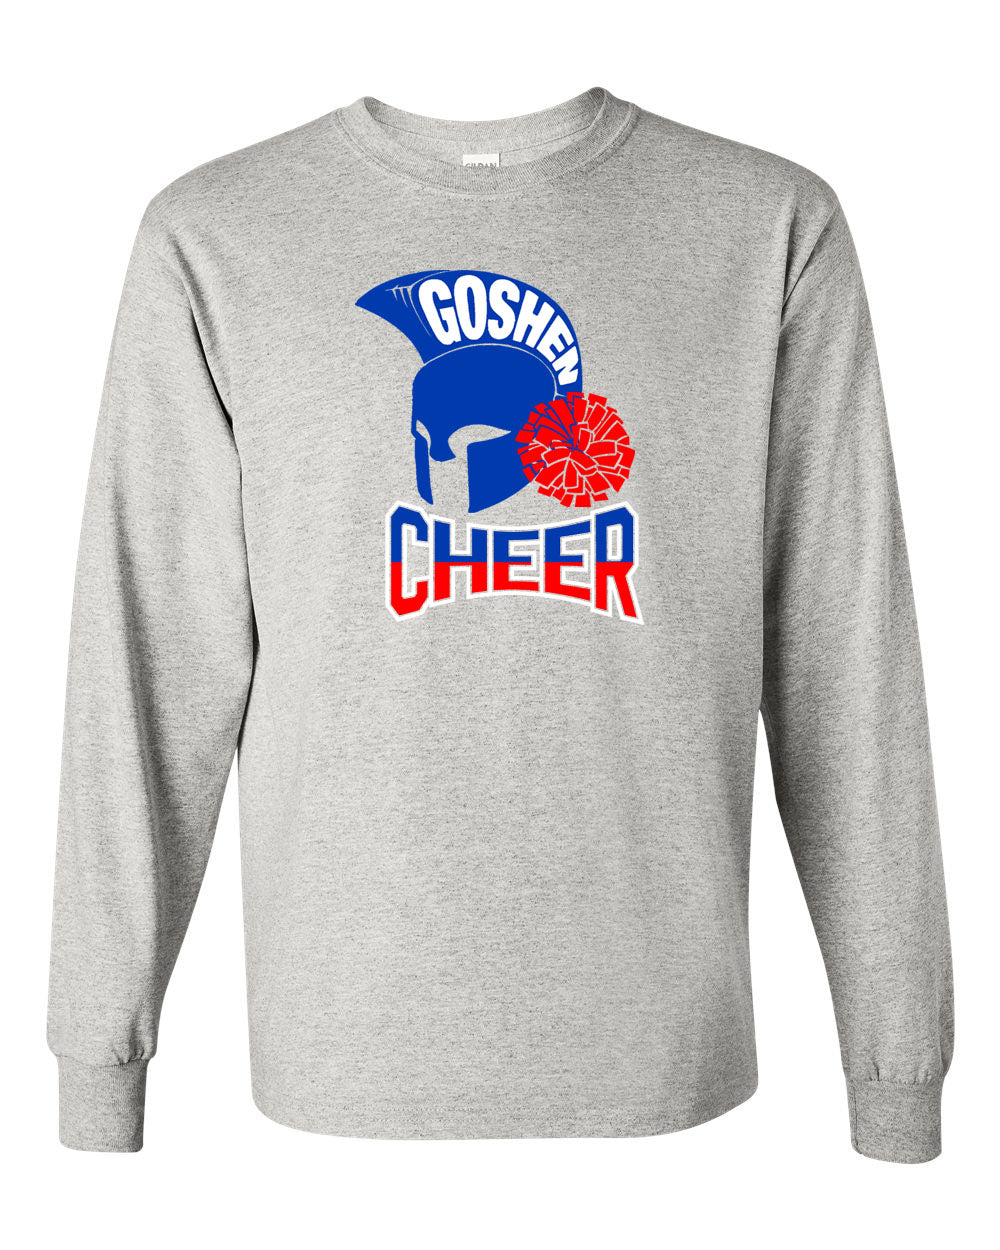 Goshen Cheer Design 8 Long Sleeve Shirt